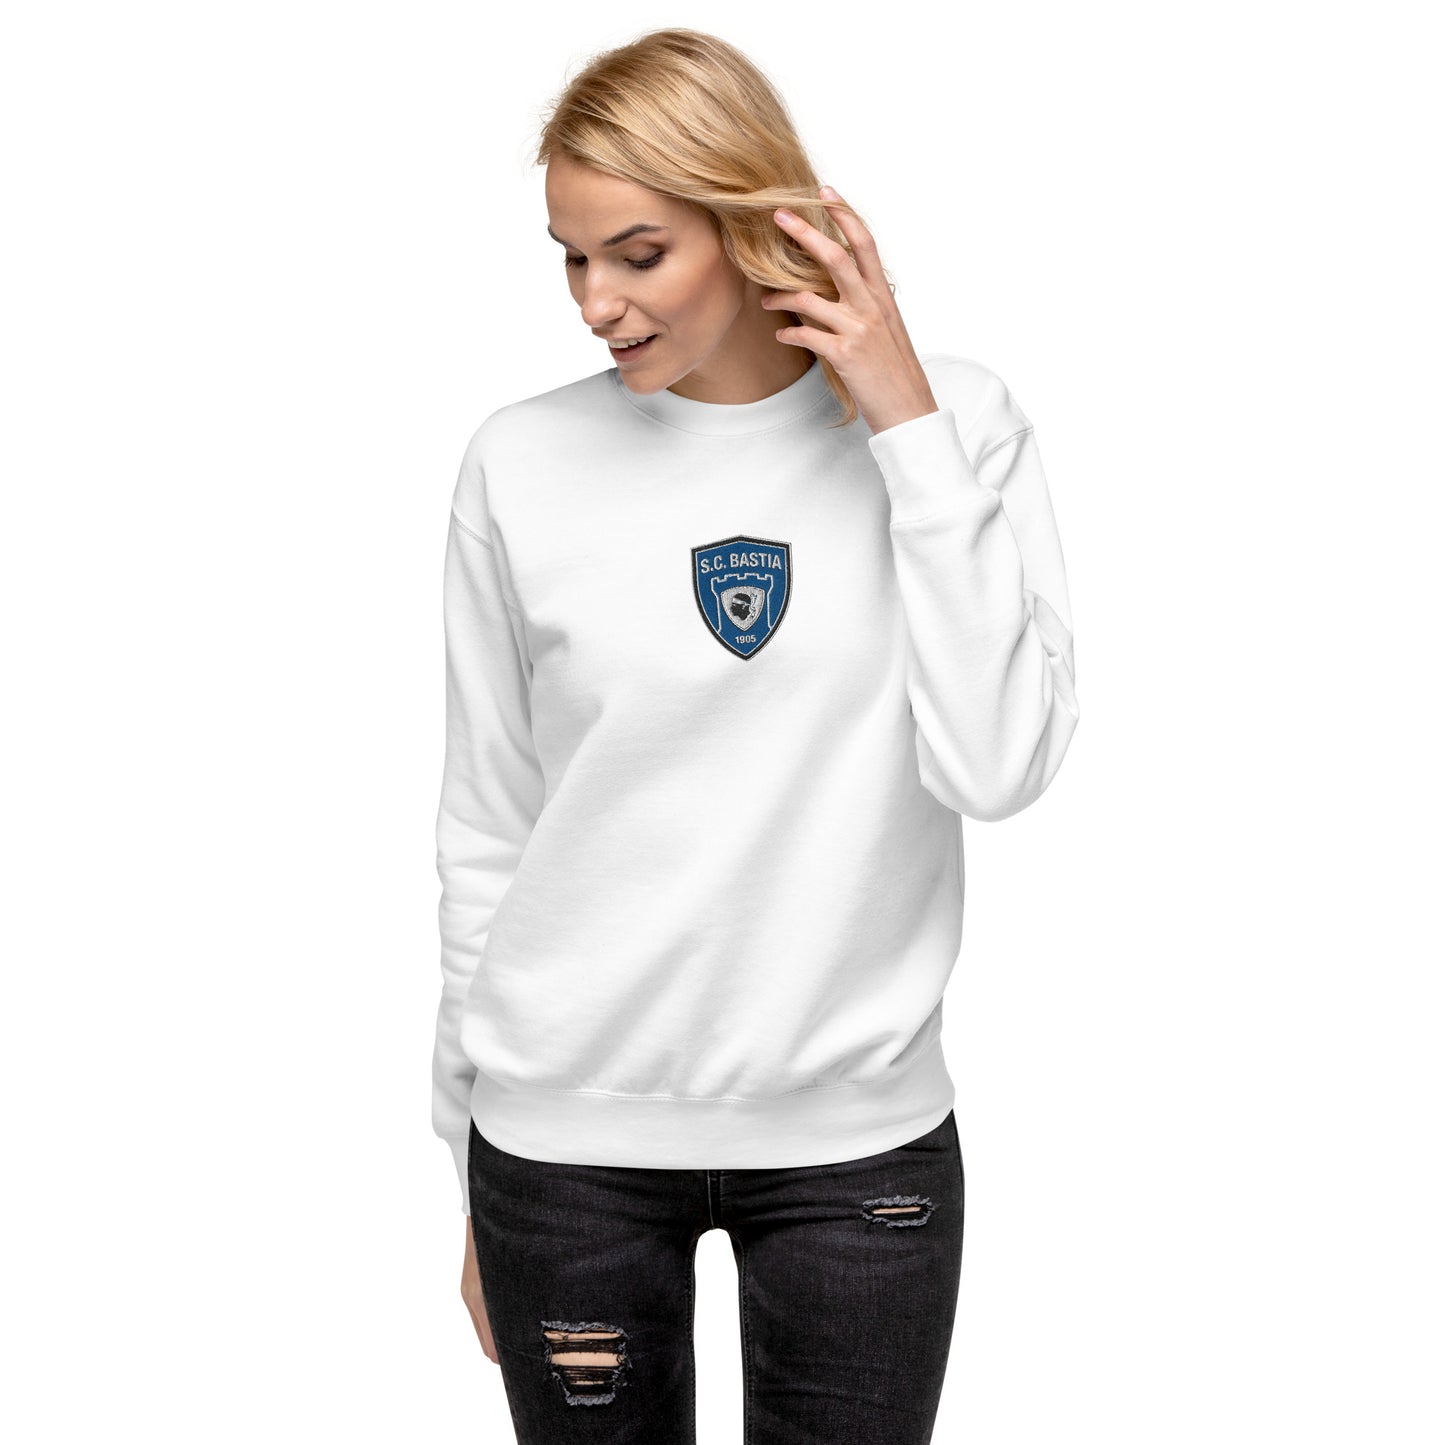 Sweatshirt premium Brodé SC Bastia